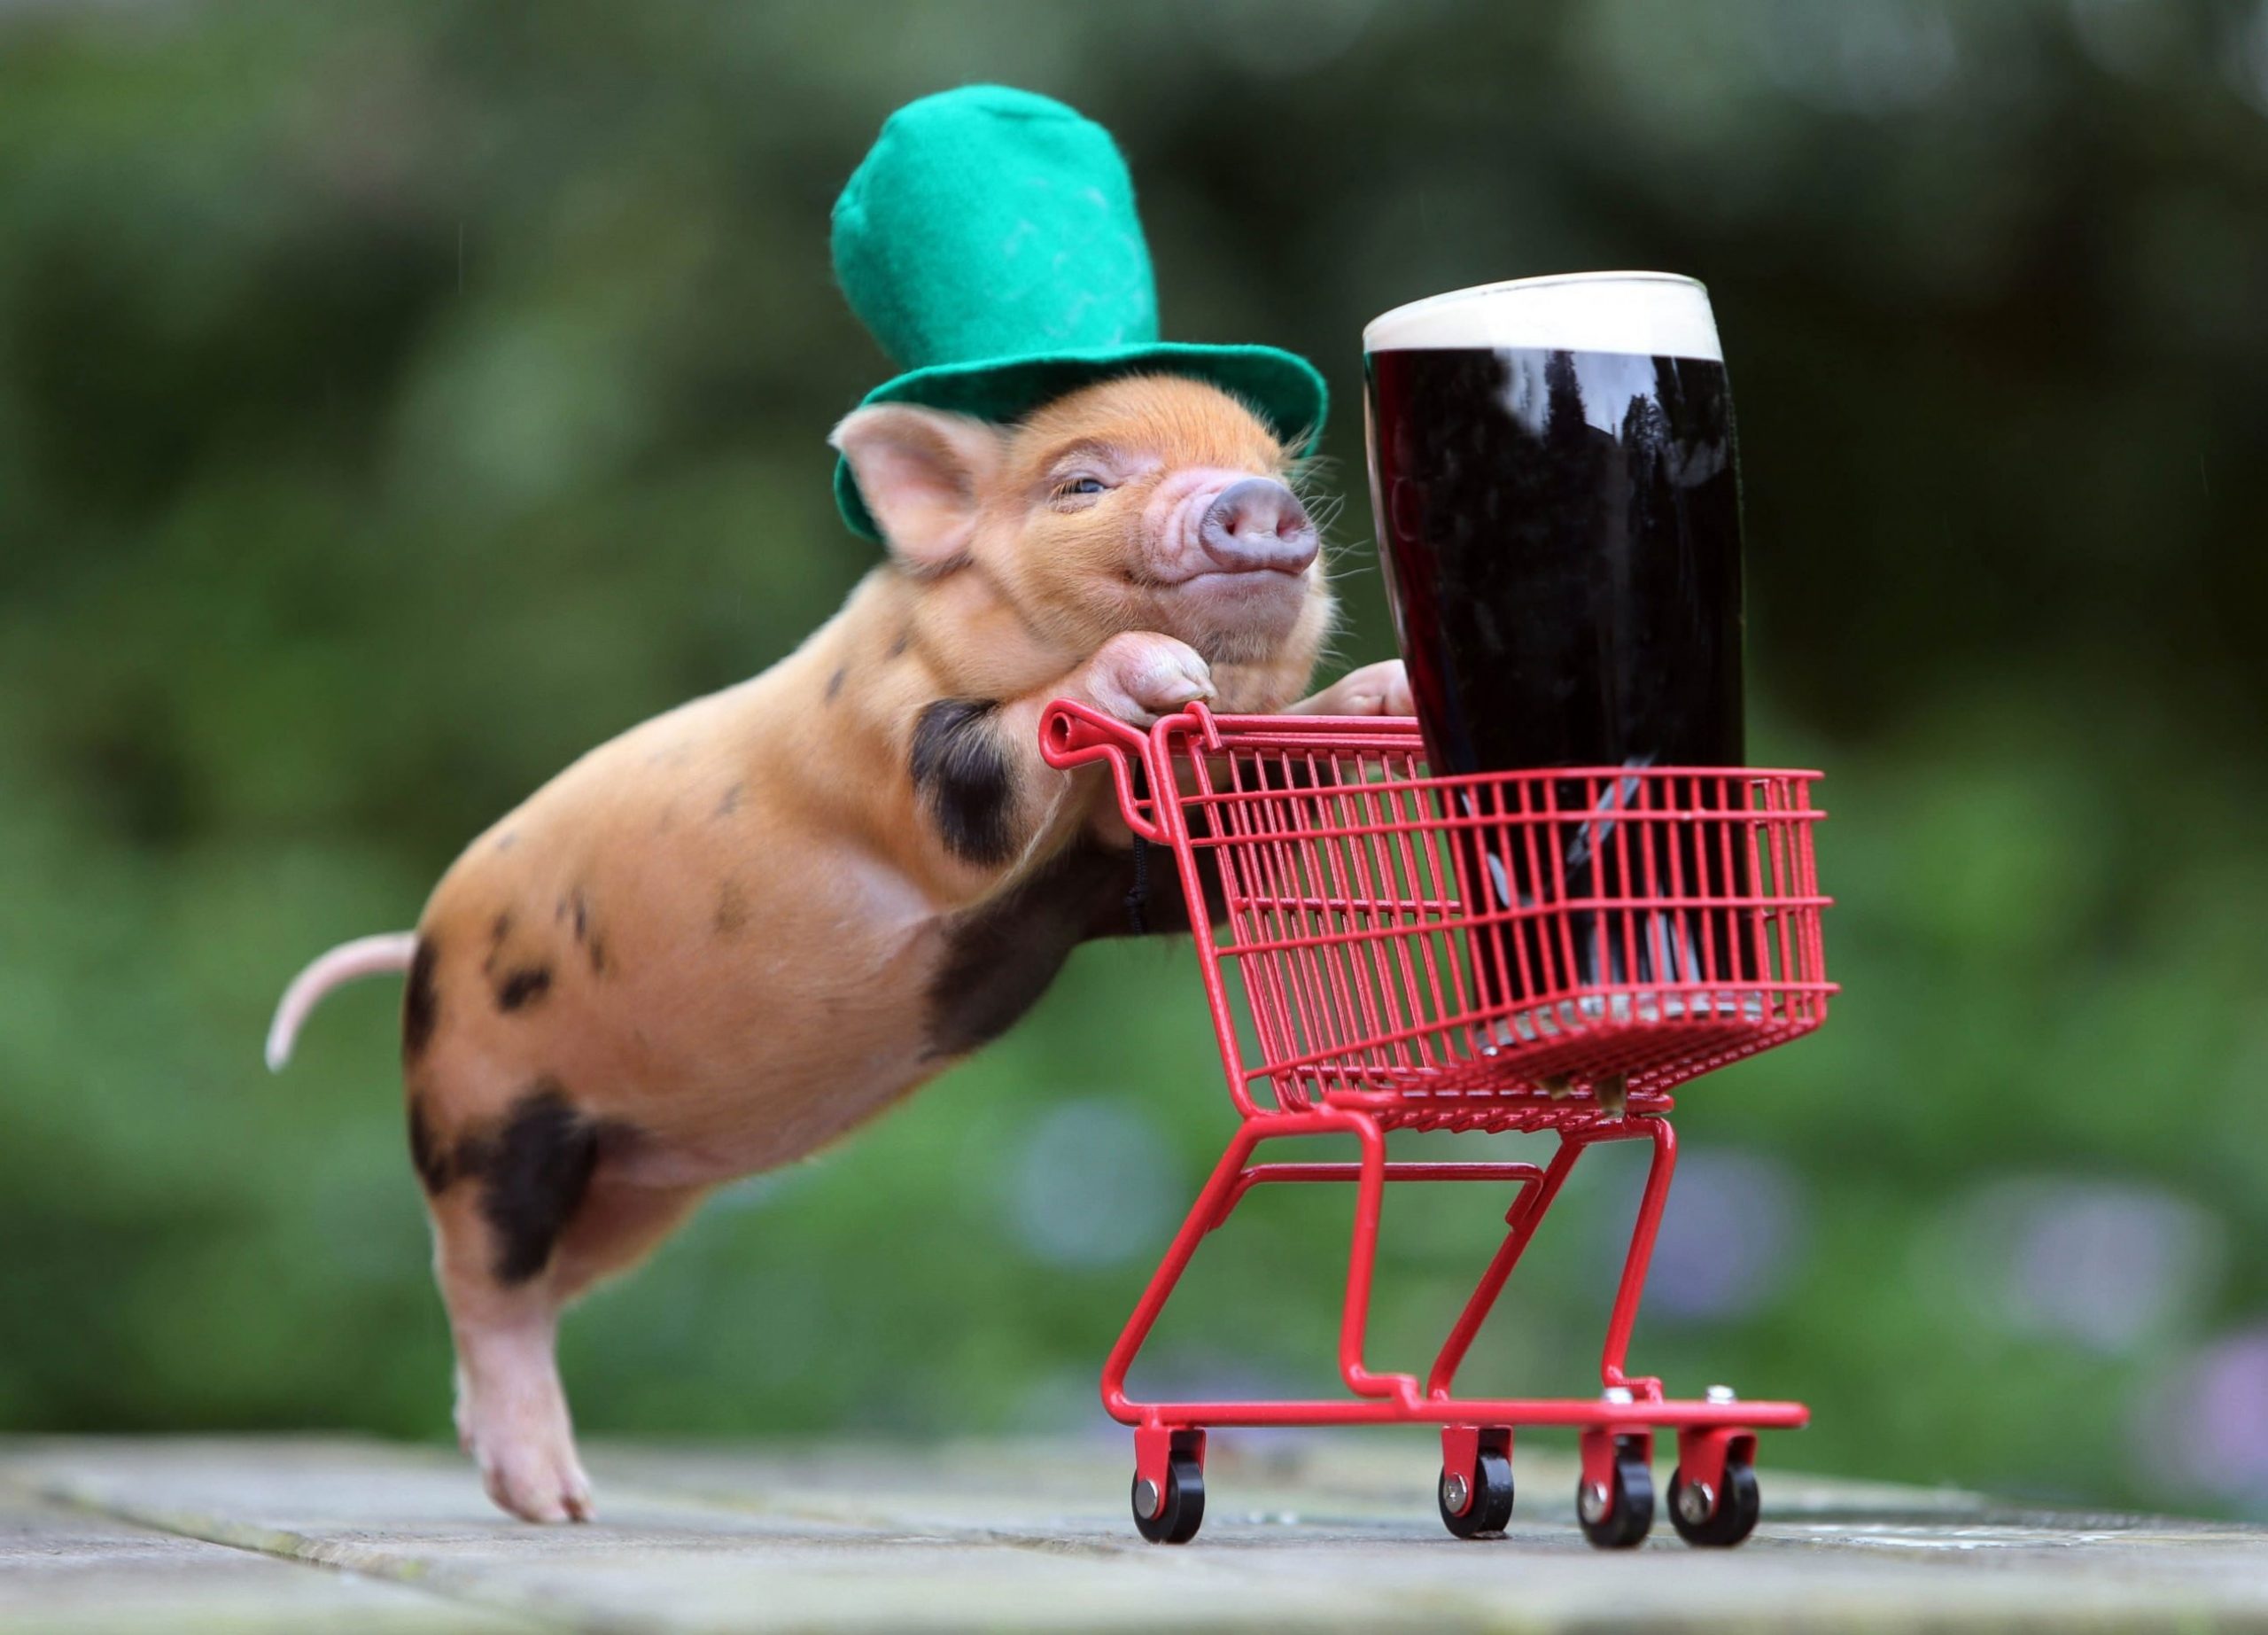 Brown piglet wallpaper, humor, beer, funny hats, baby animals, pigs, Guinness